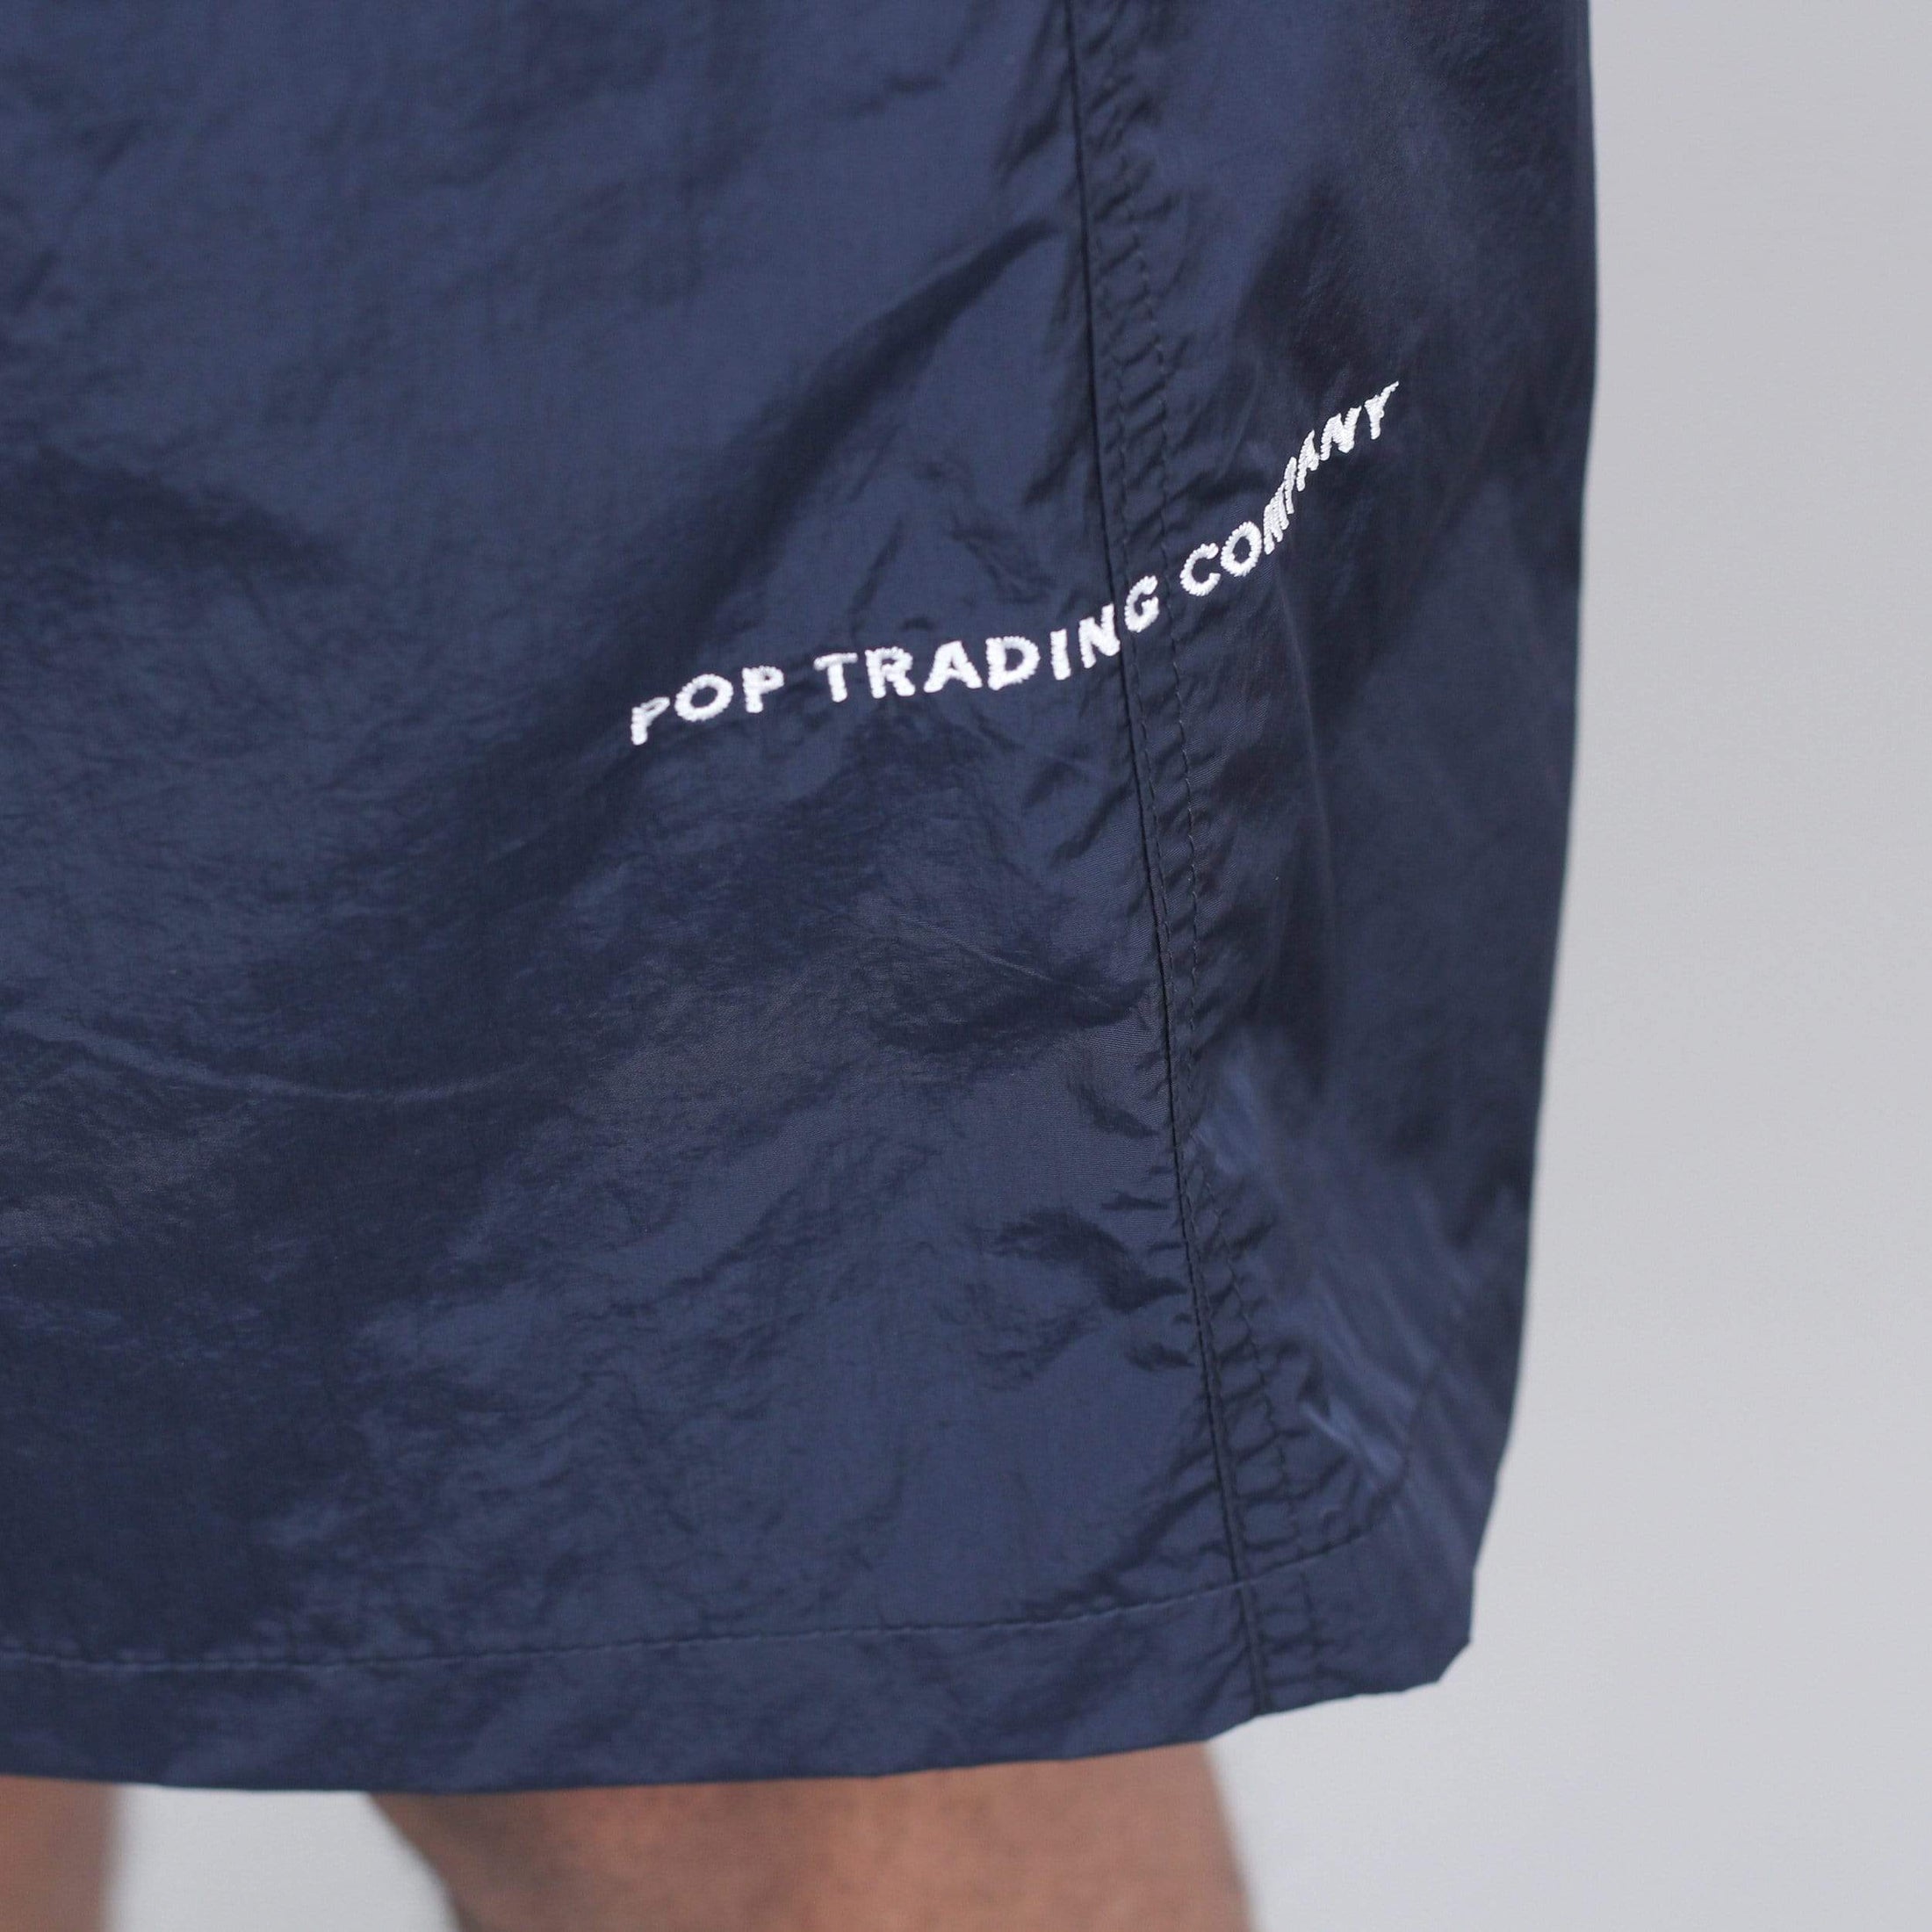 Pop Trading Painter Shorts Navy